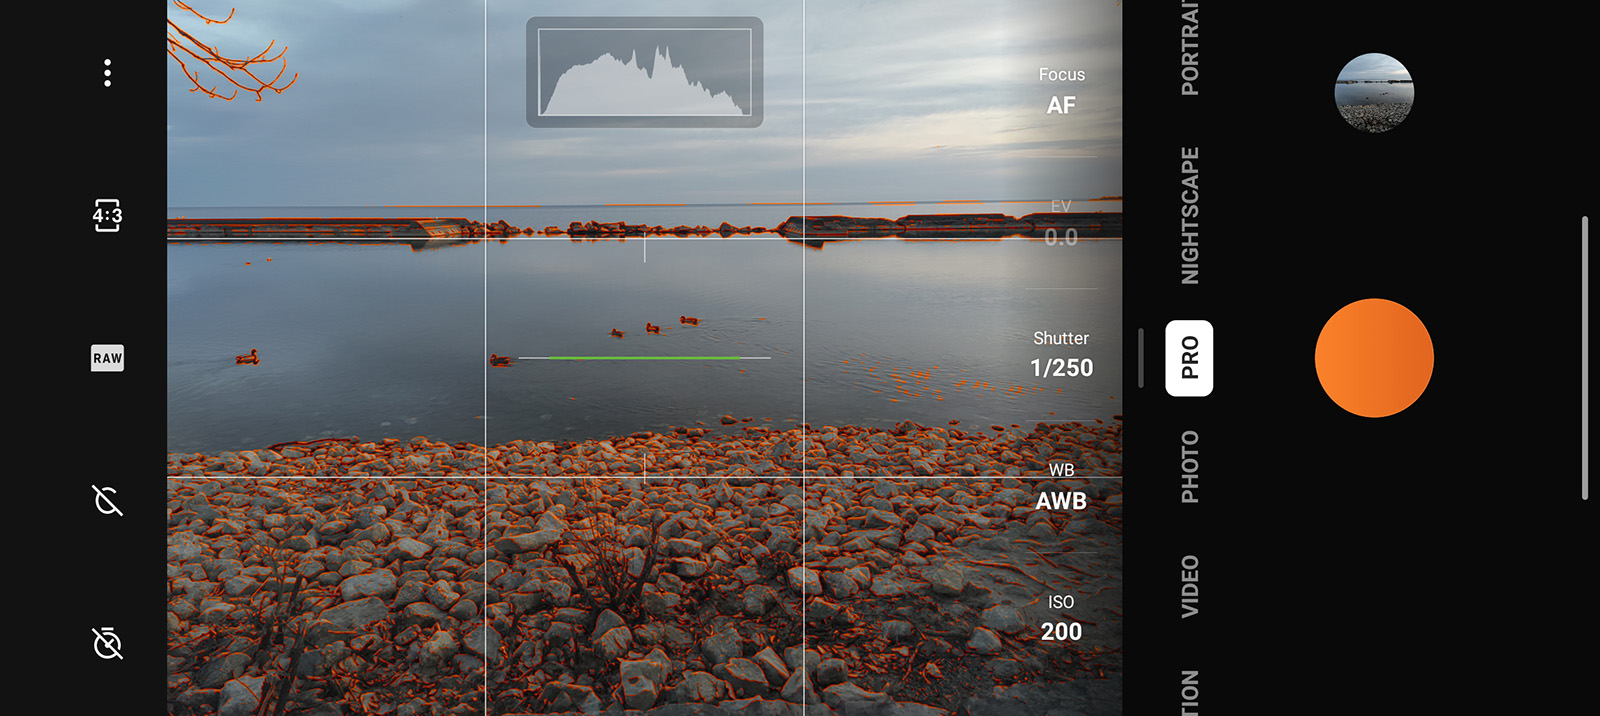 OnePlus-9-Pro-focus-peaking.jpg